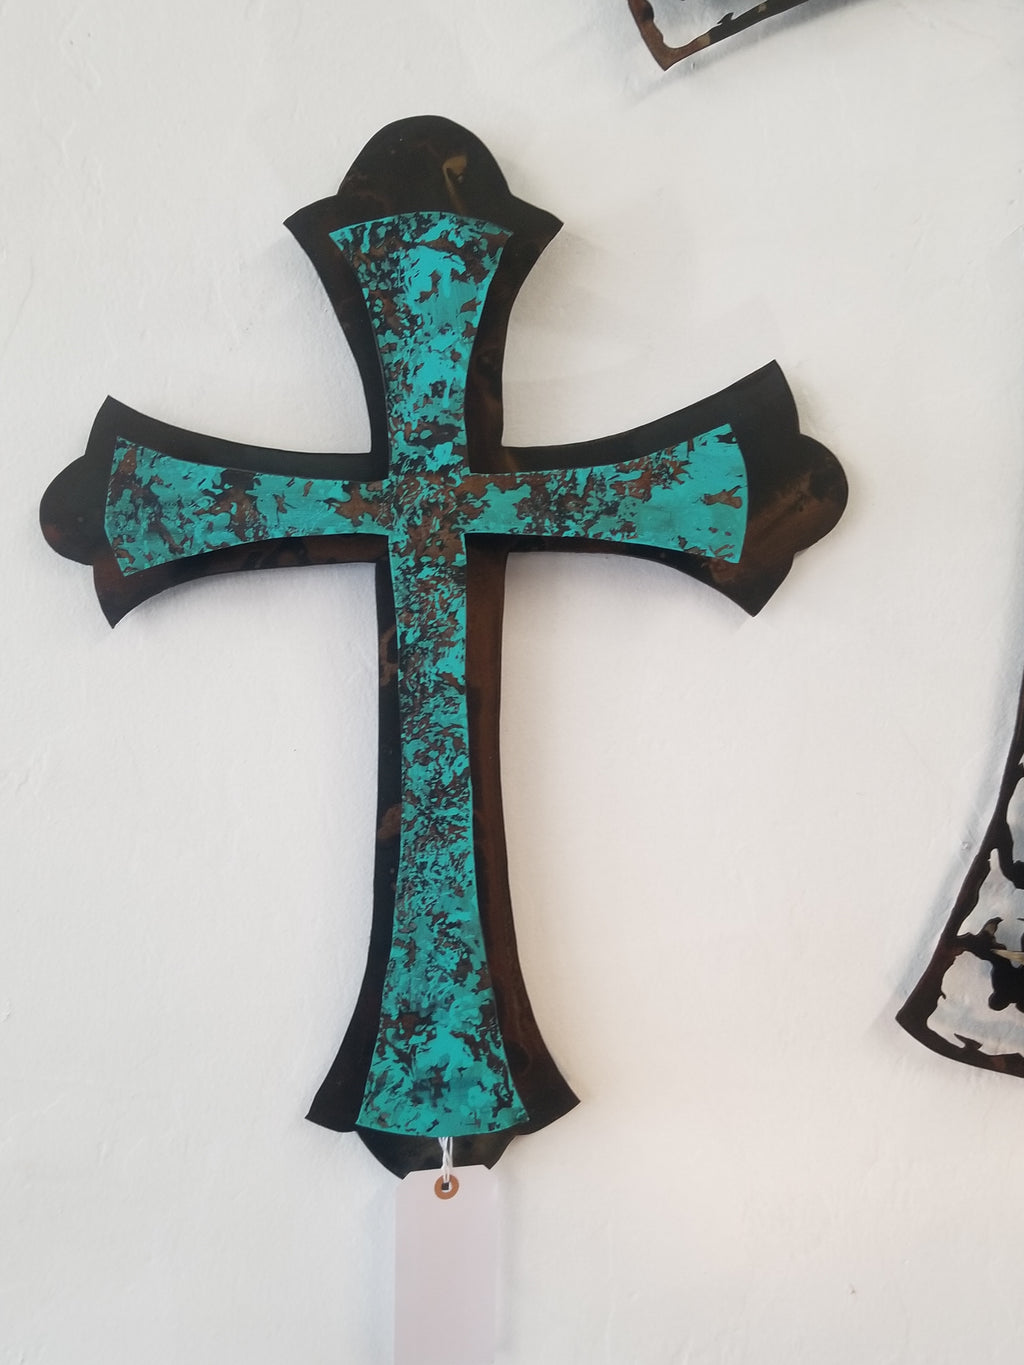 Celtic Cross 3-D Metal Art in Turquoise 2ft tall STOCK ITEM!